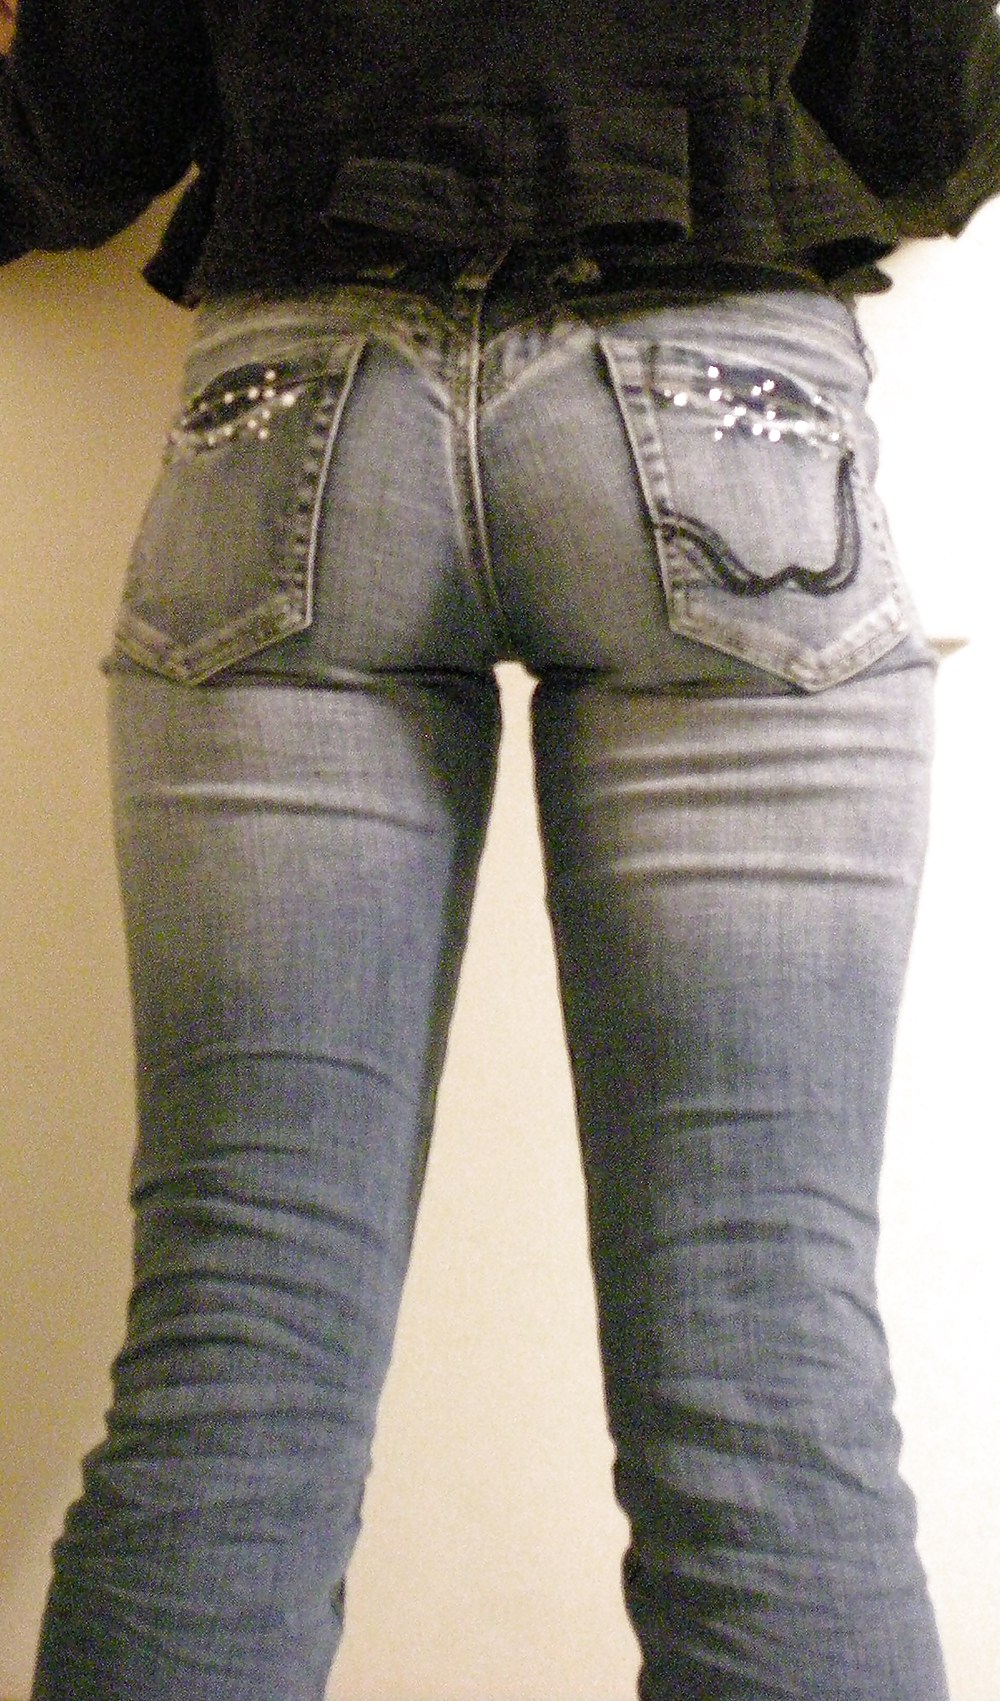 Reinas en jeans cxxxi
 #11197667